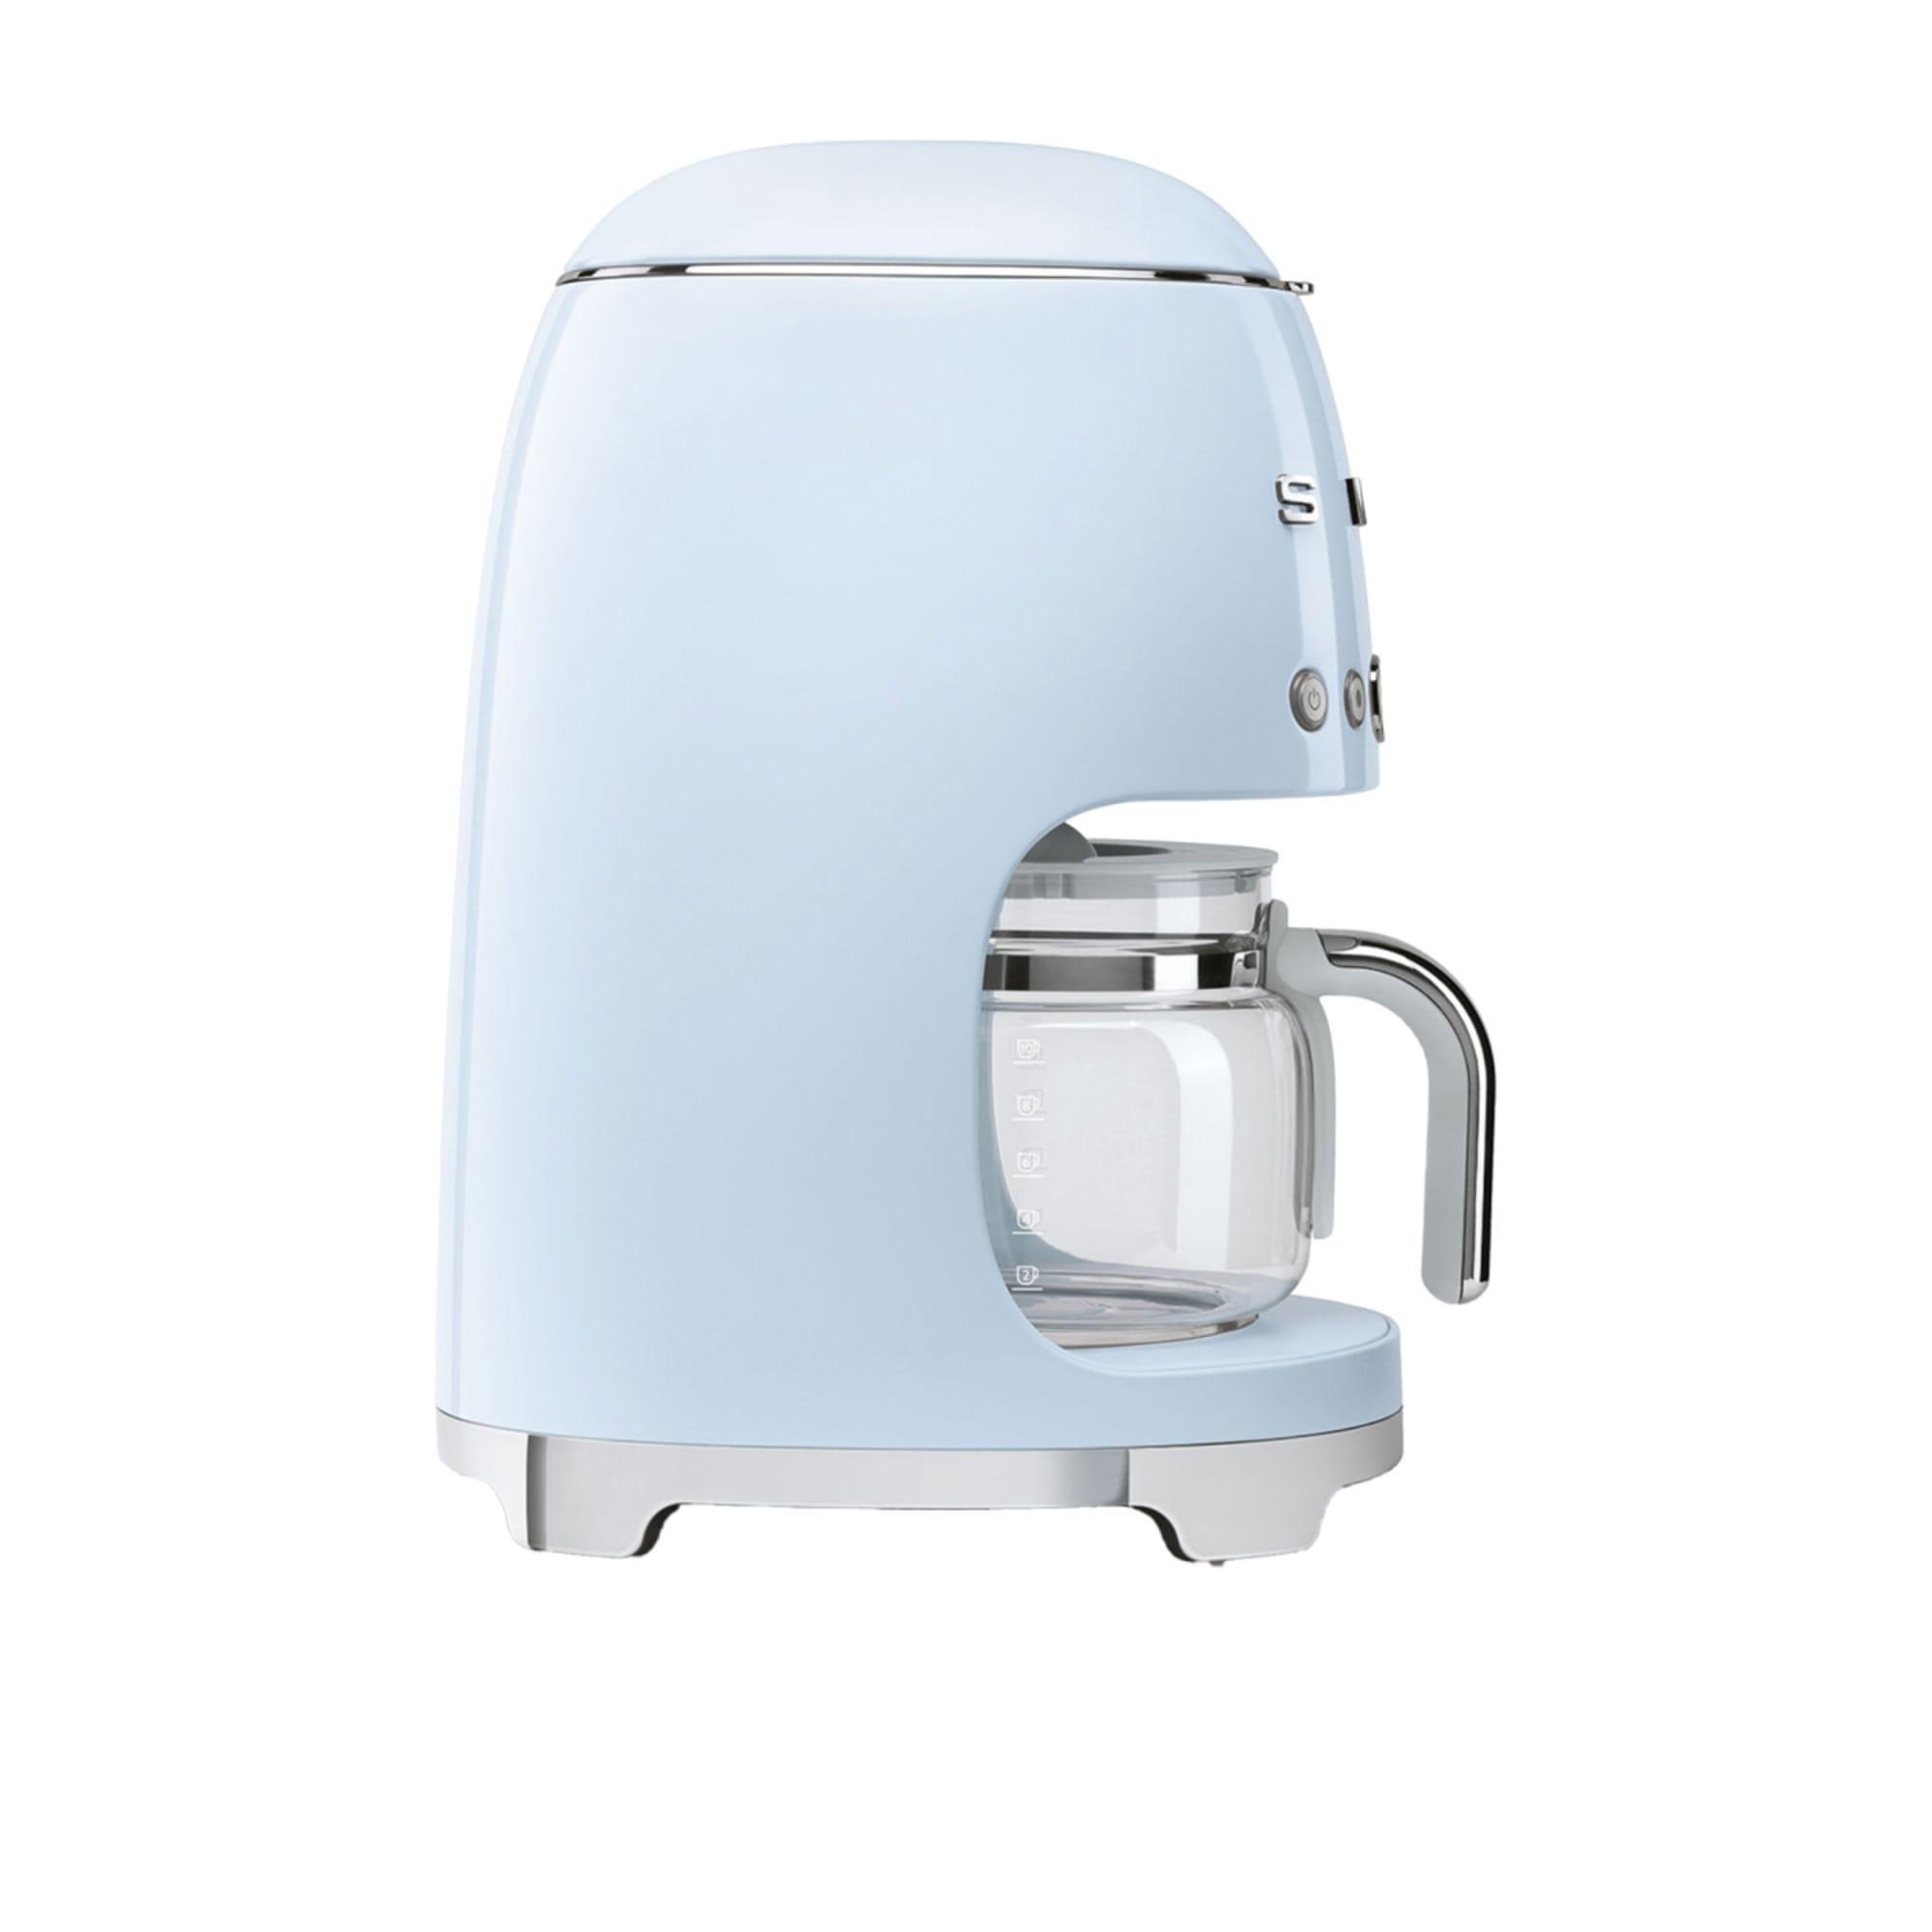 Smeg 50s Retro Style Drip Filter Coffee Machine Pastel Blue Image 4